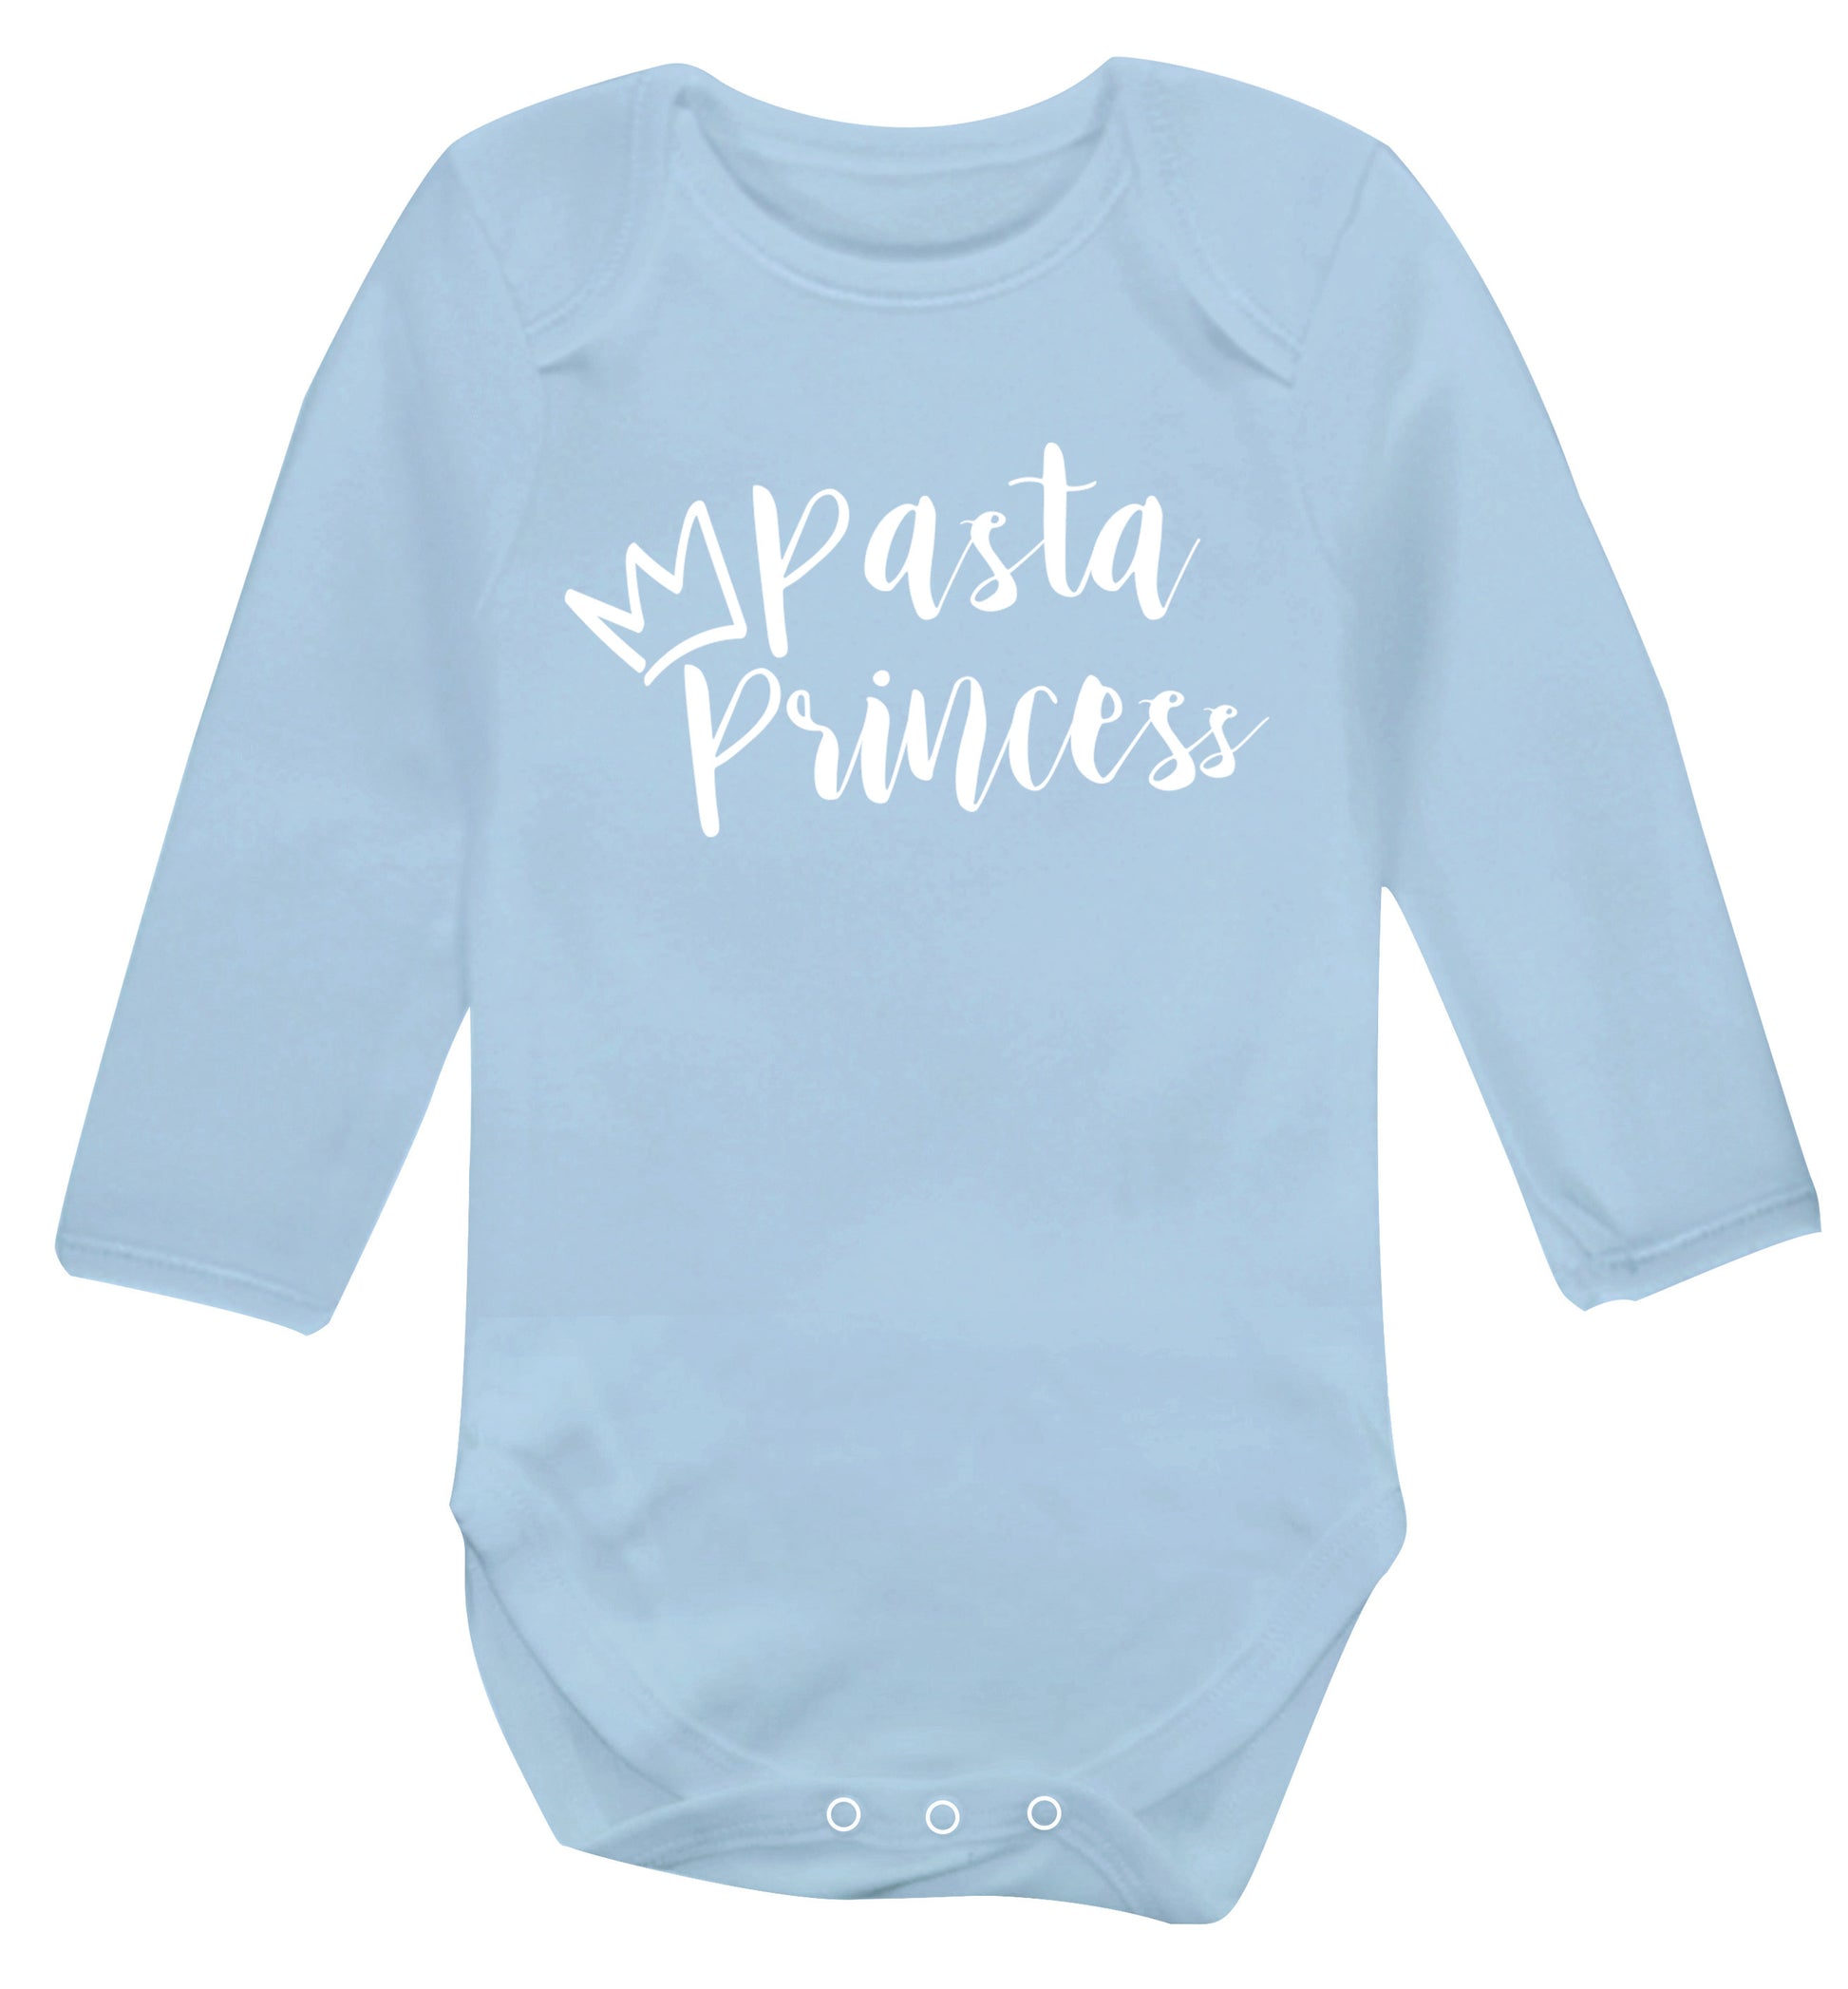 Pasta Princess Baby Vest long sleeved pale blue 6-12 months